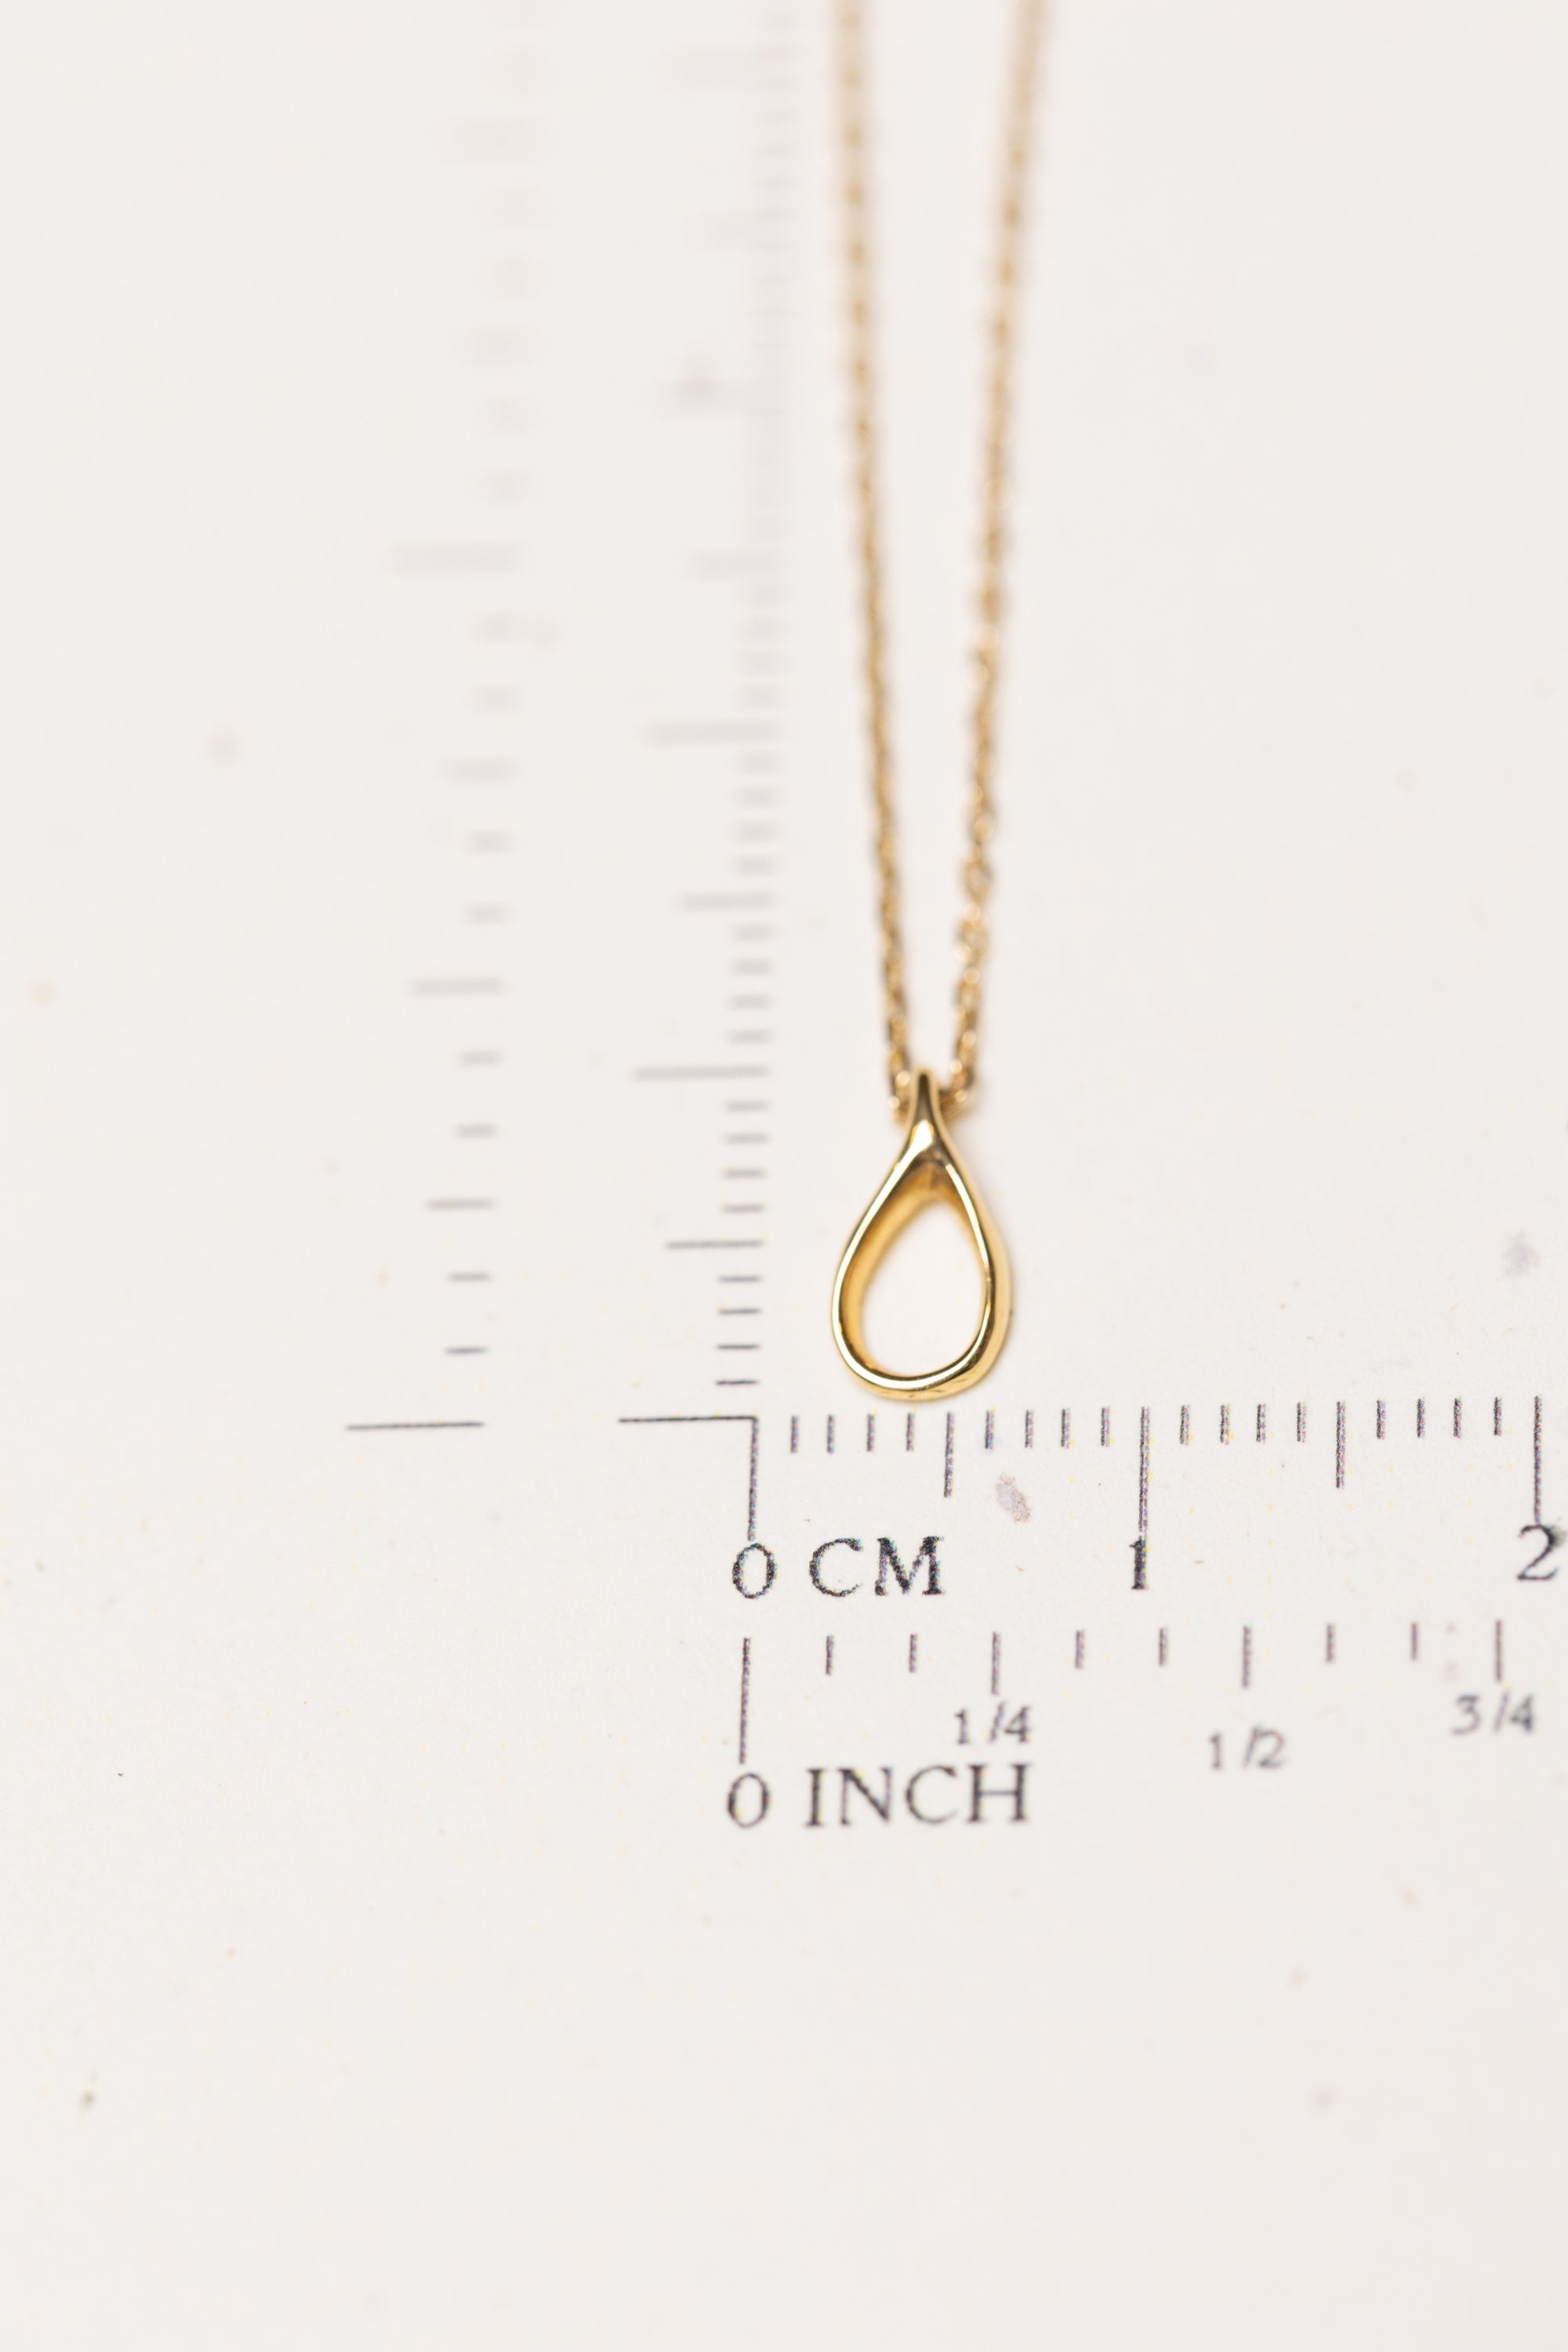 Simple Gold Raindrop Necklace (18k)